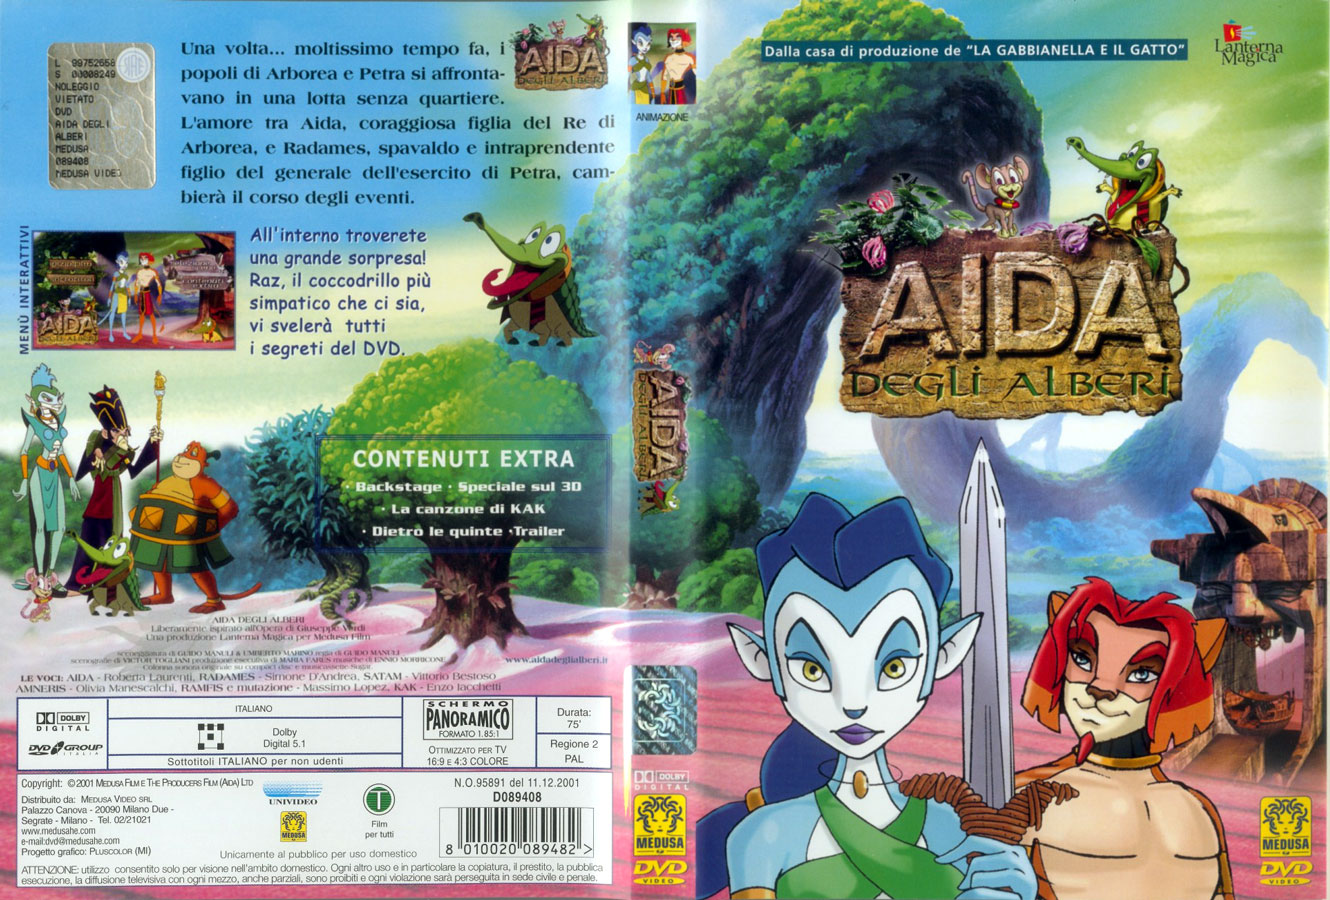 Aida degli alberi movie